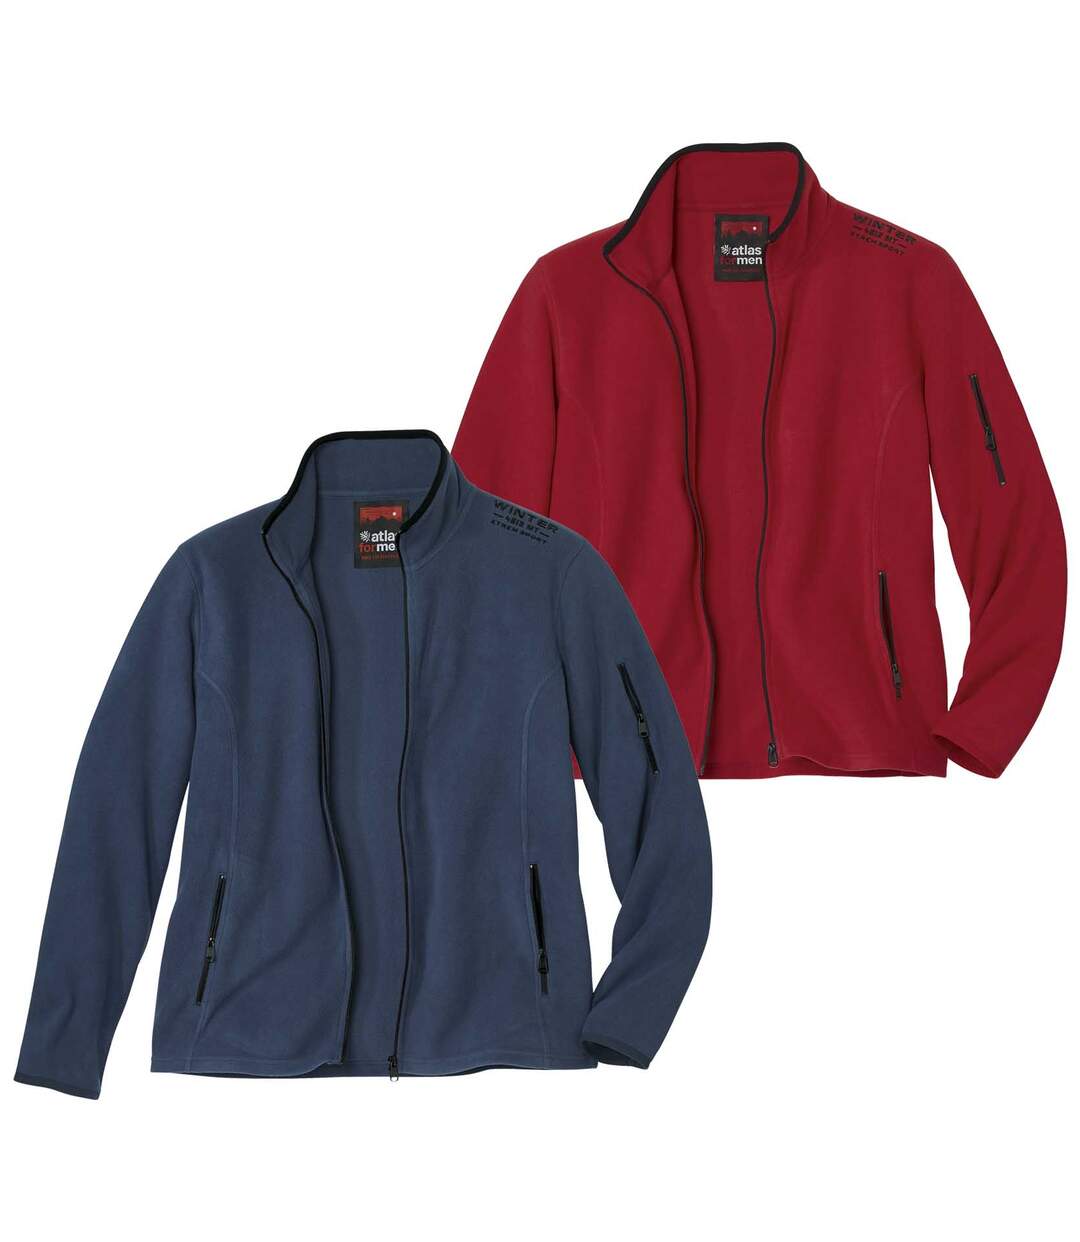 Pack of 2 Men's Red & Blue Microfleece Jackets - Full Zip Atlas For Men